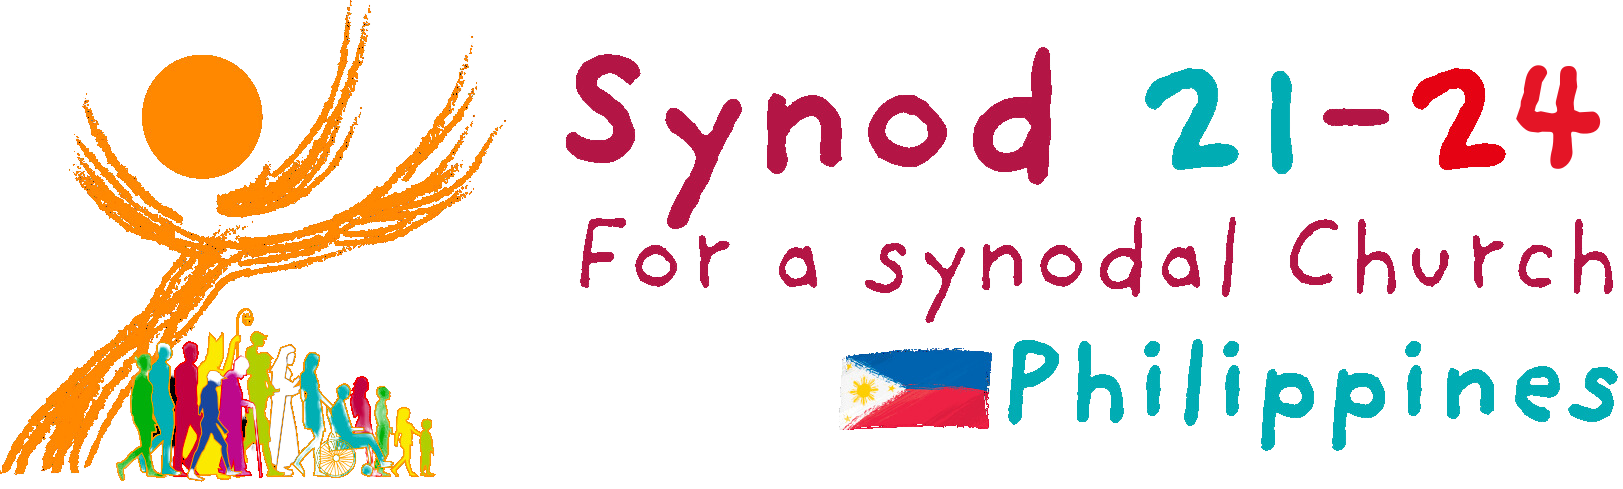 SYNOD 2021 - 2024 Philippines